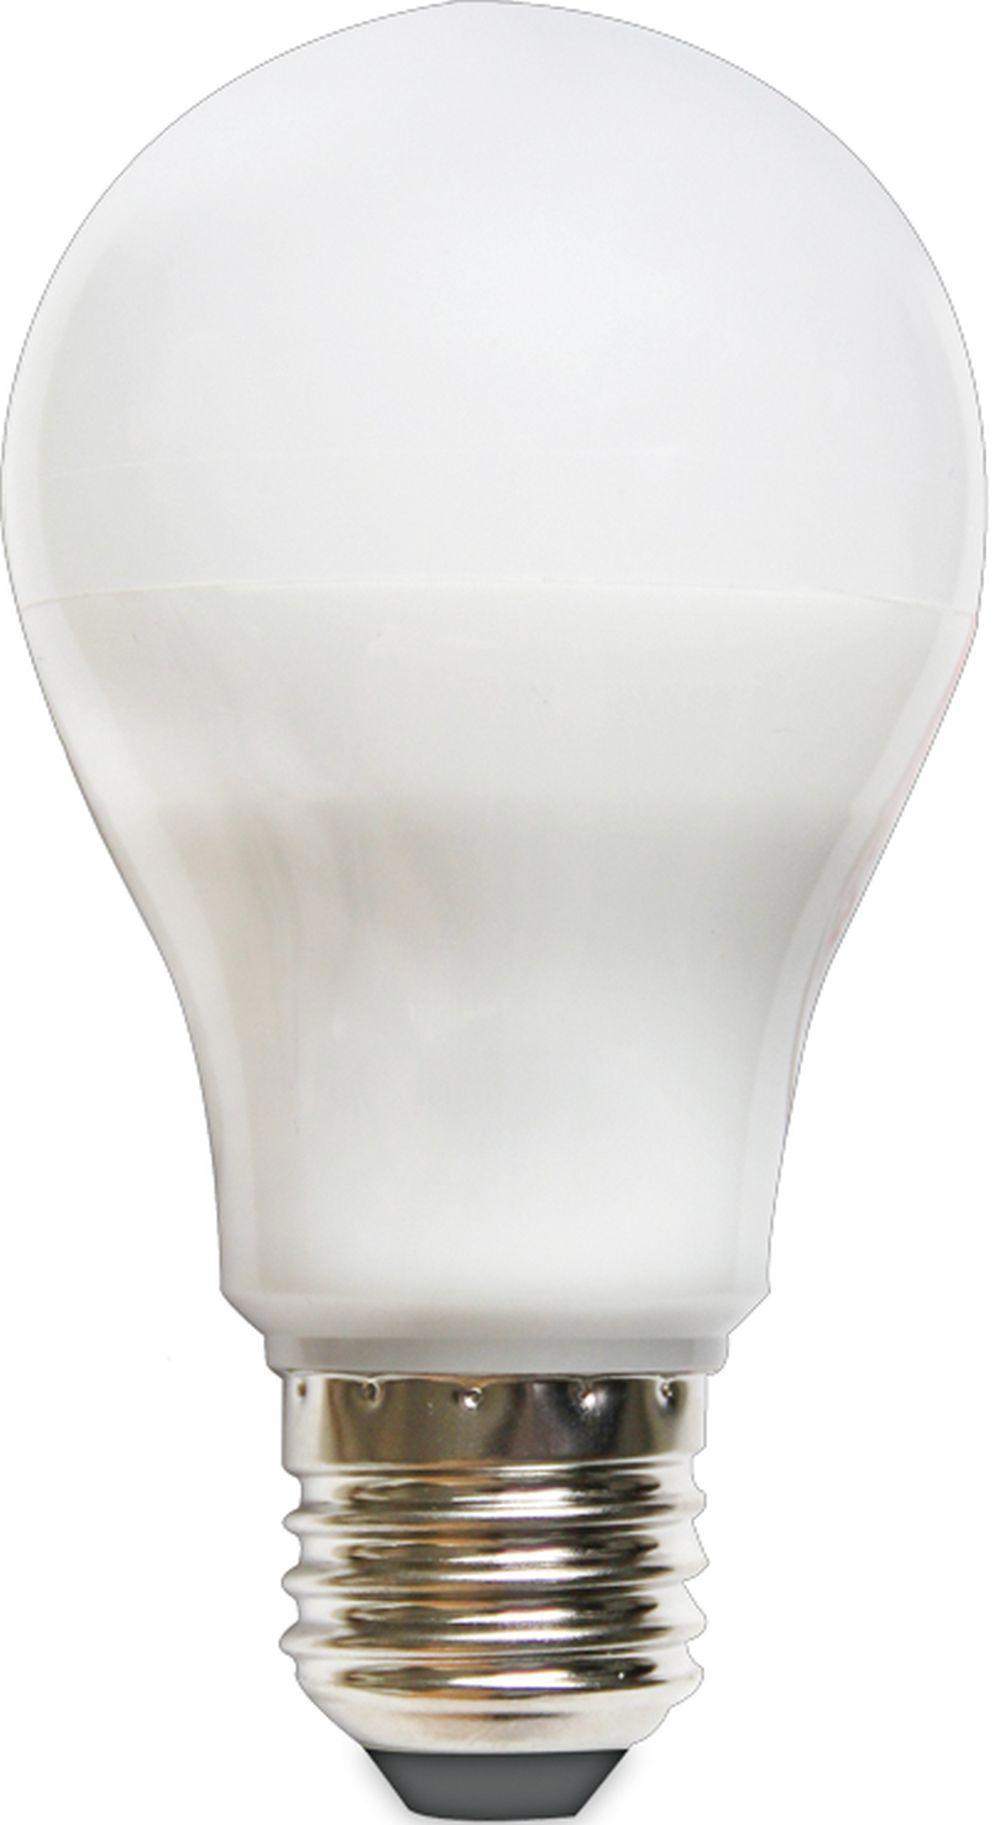 90121391 Лампа Premium светодионая E27 12 Вт груша 1080 Лм теплый свет STLM-0112517 ECOLA